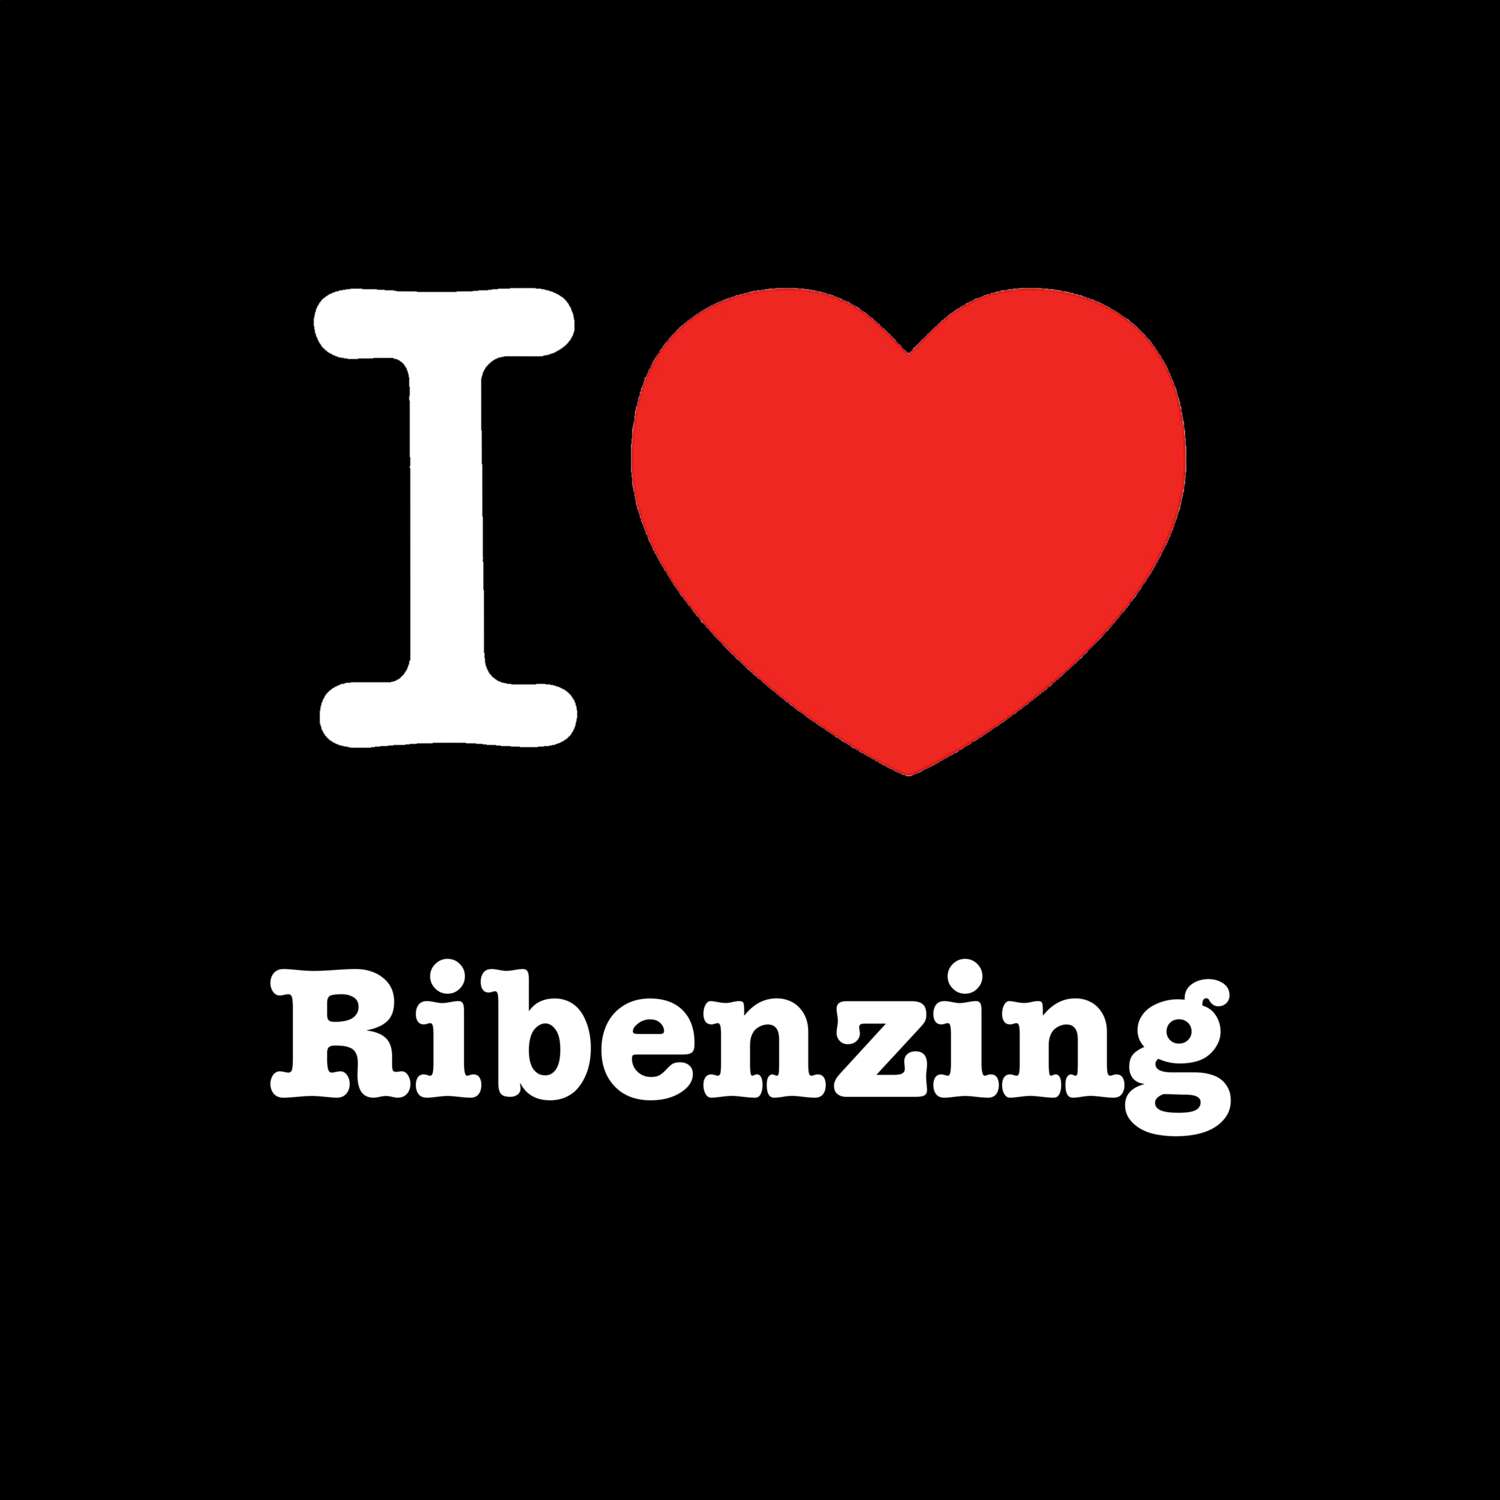 Ribenzing T-Shirt »I love«